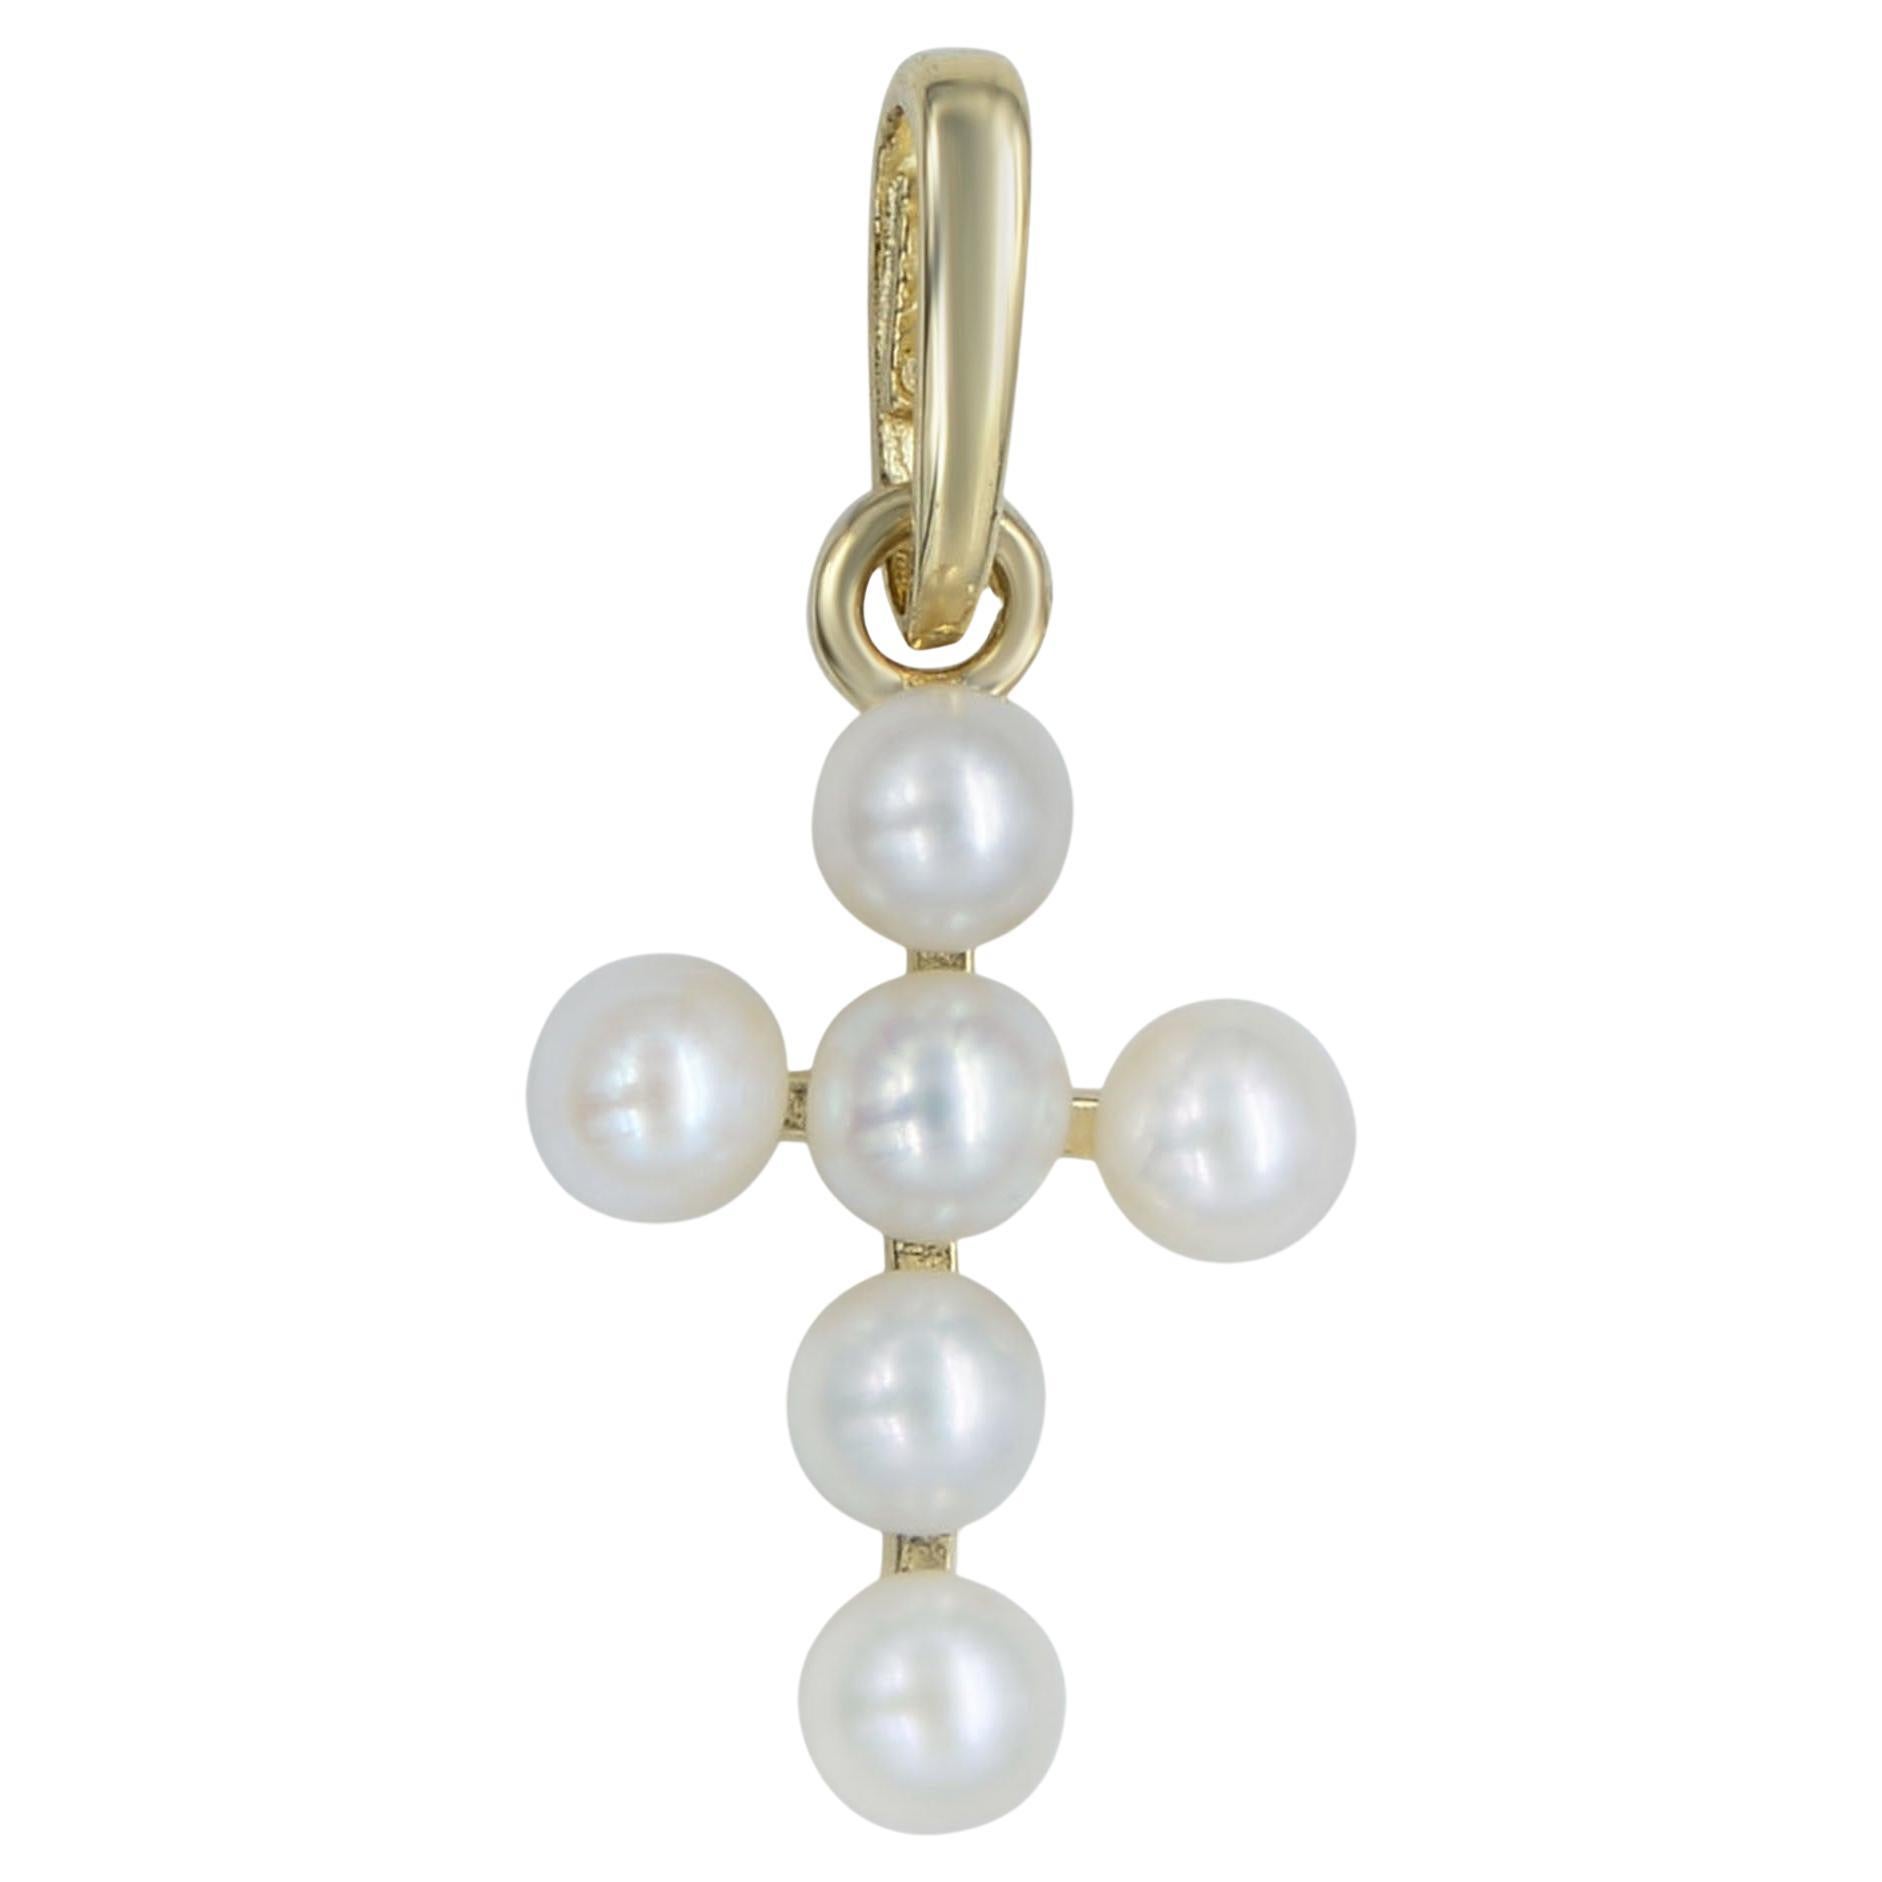 Rachel Koen Pendentif croix en or jaune 14 carats avec petite perle